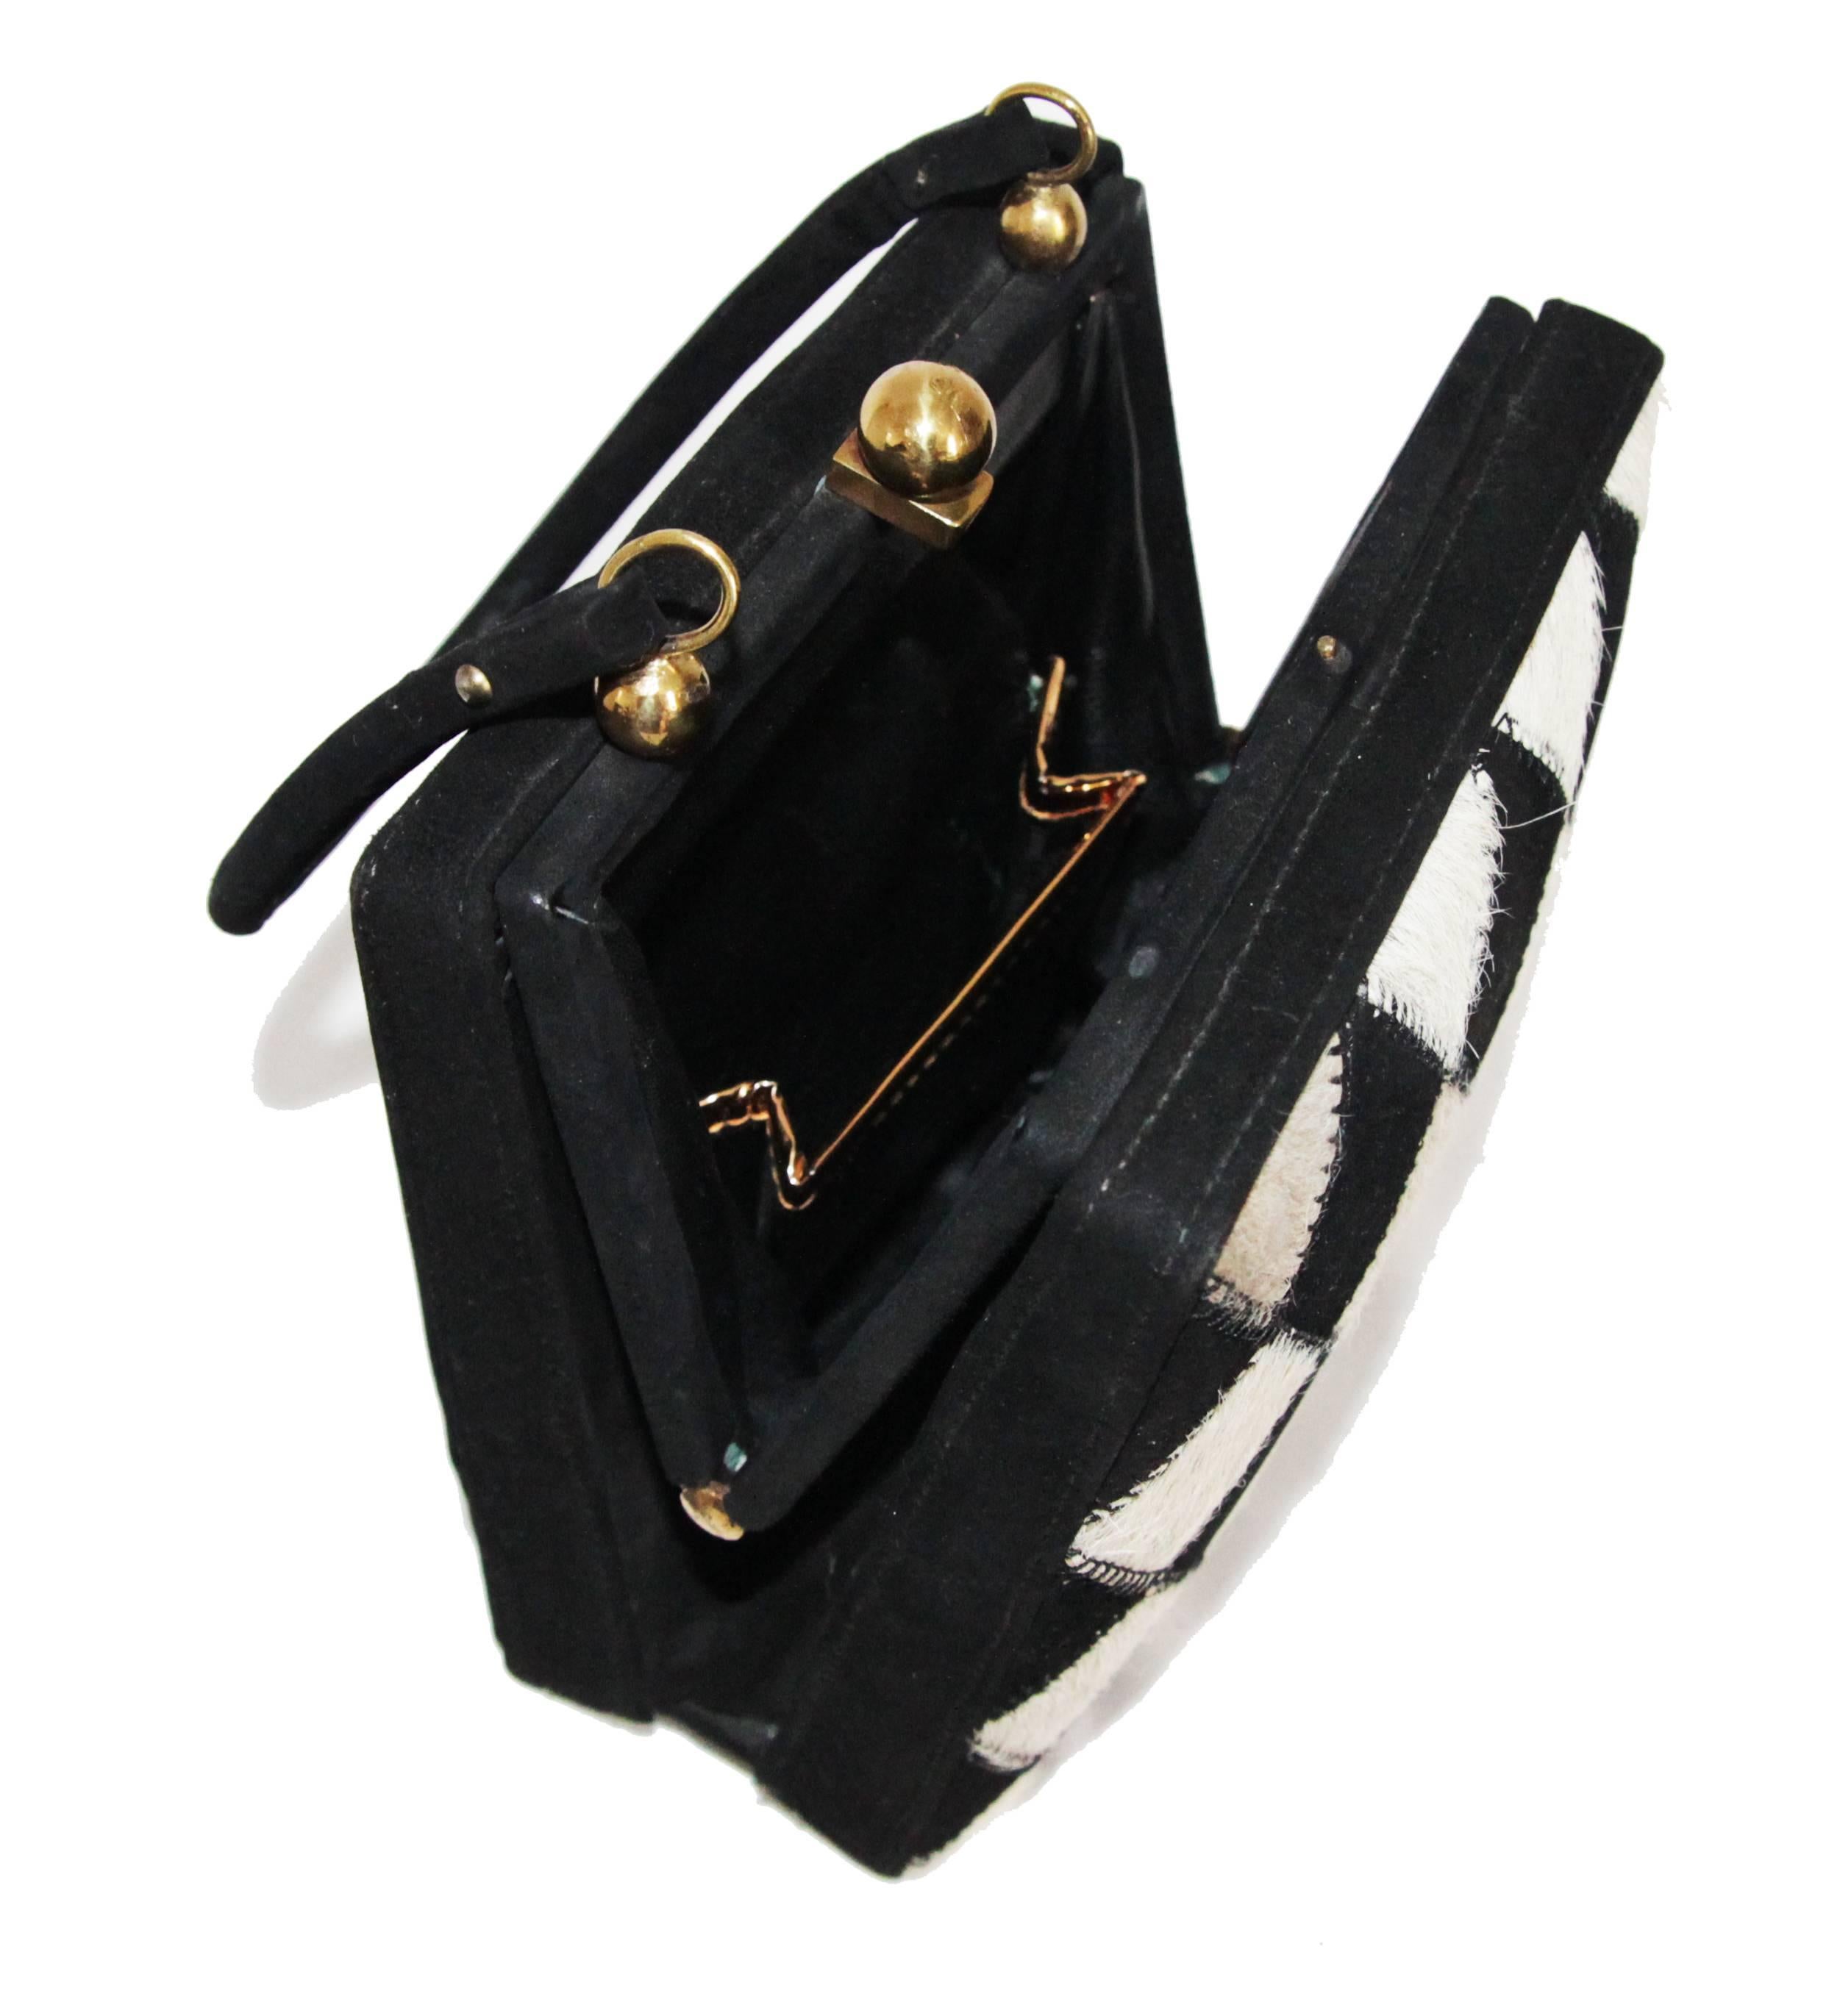 Women's Unique Black and white Arlequin vintage handbag c.1950